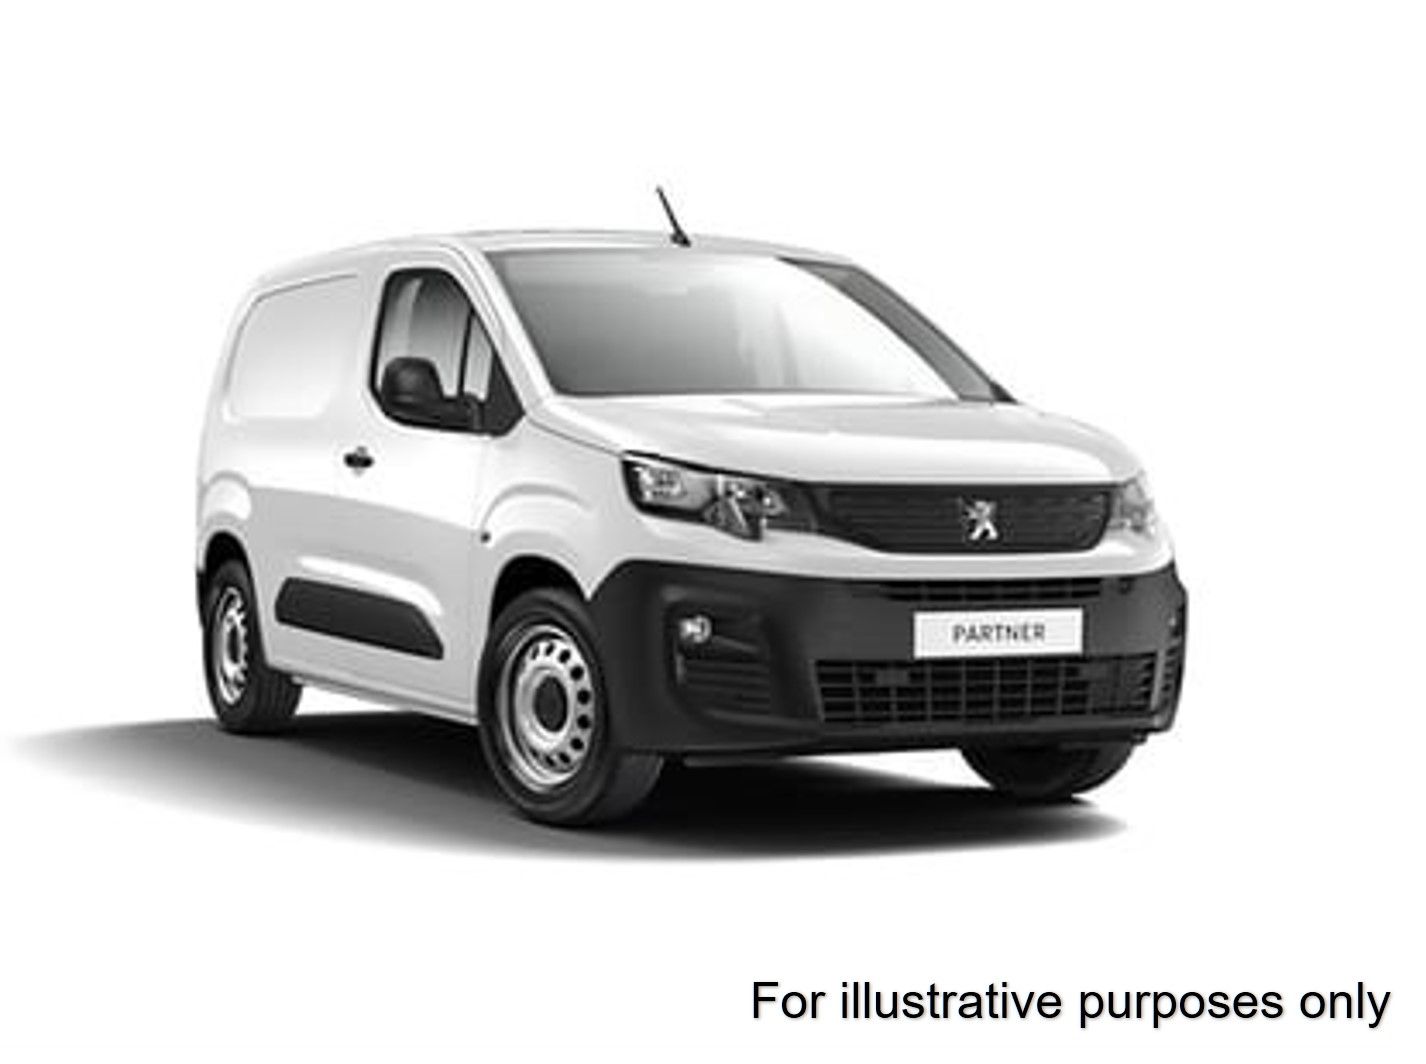 2019 Peugeot Partner 1000 1.5 Bluehdi 100 Professional Van (NX19WRW)